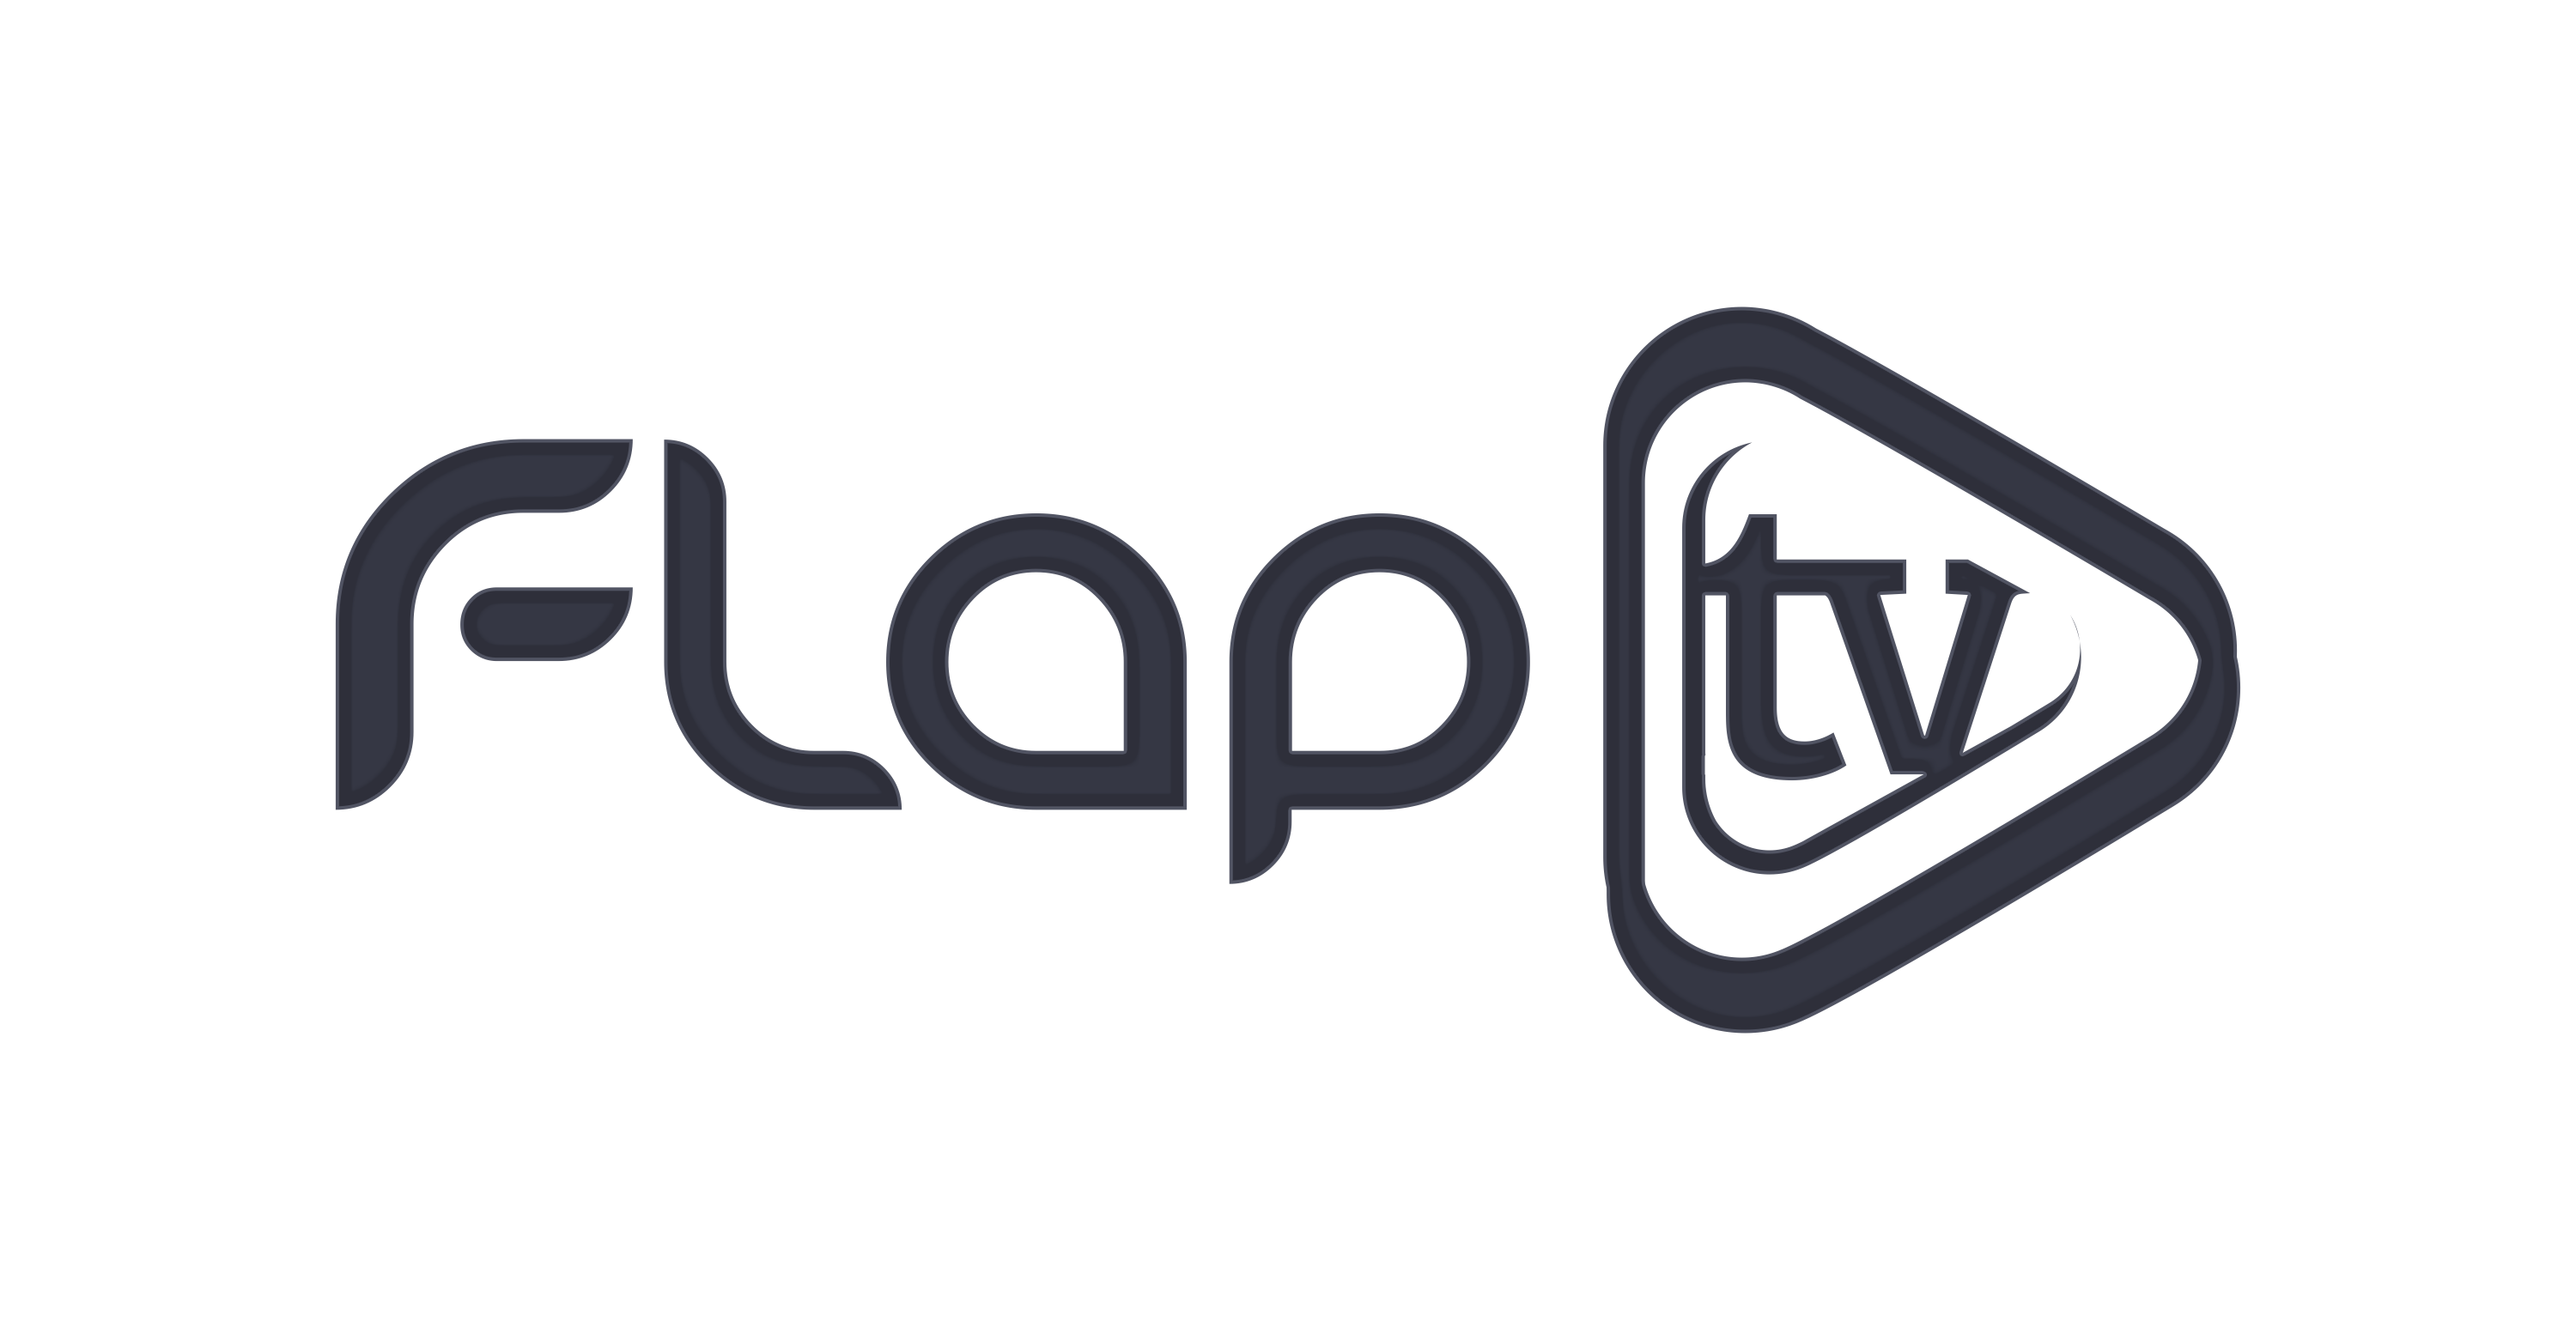 Flap Tv